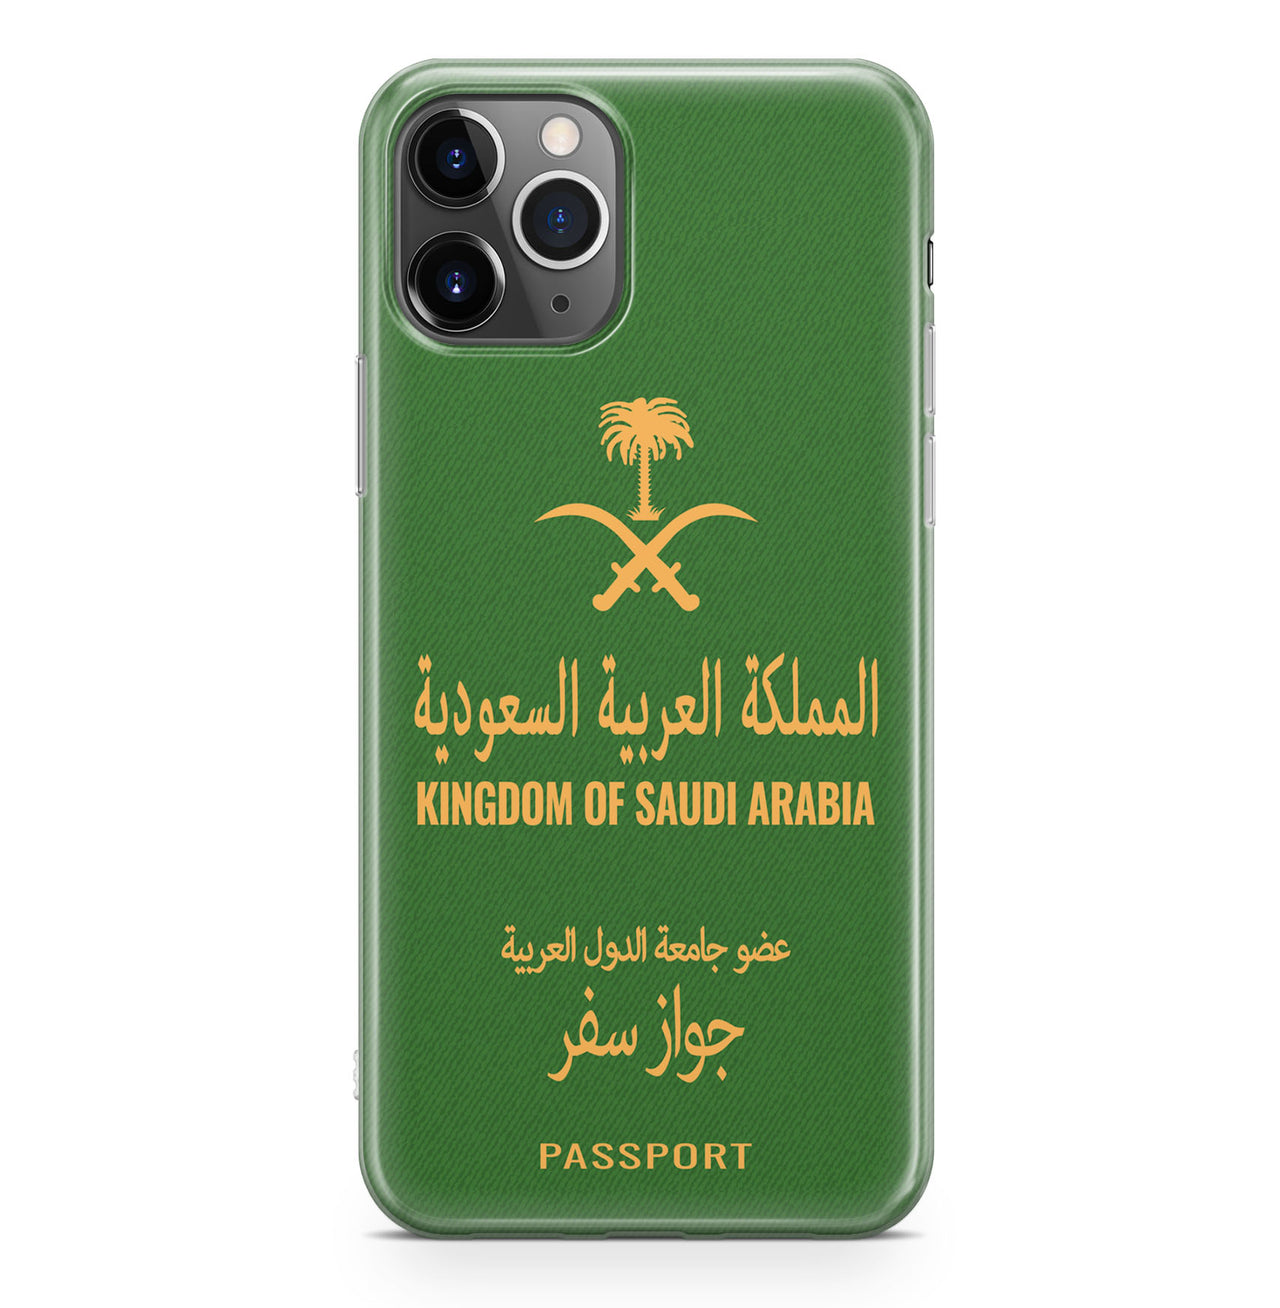 Kindgom Of Saudi Arabia Passport Designed iPhone Cases